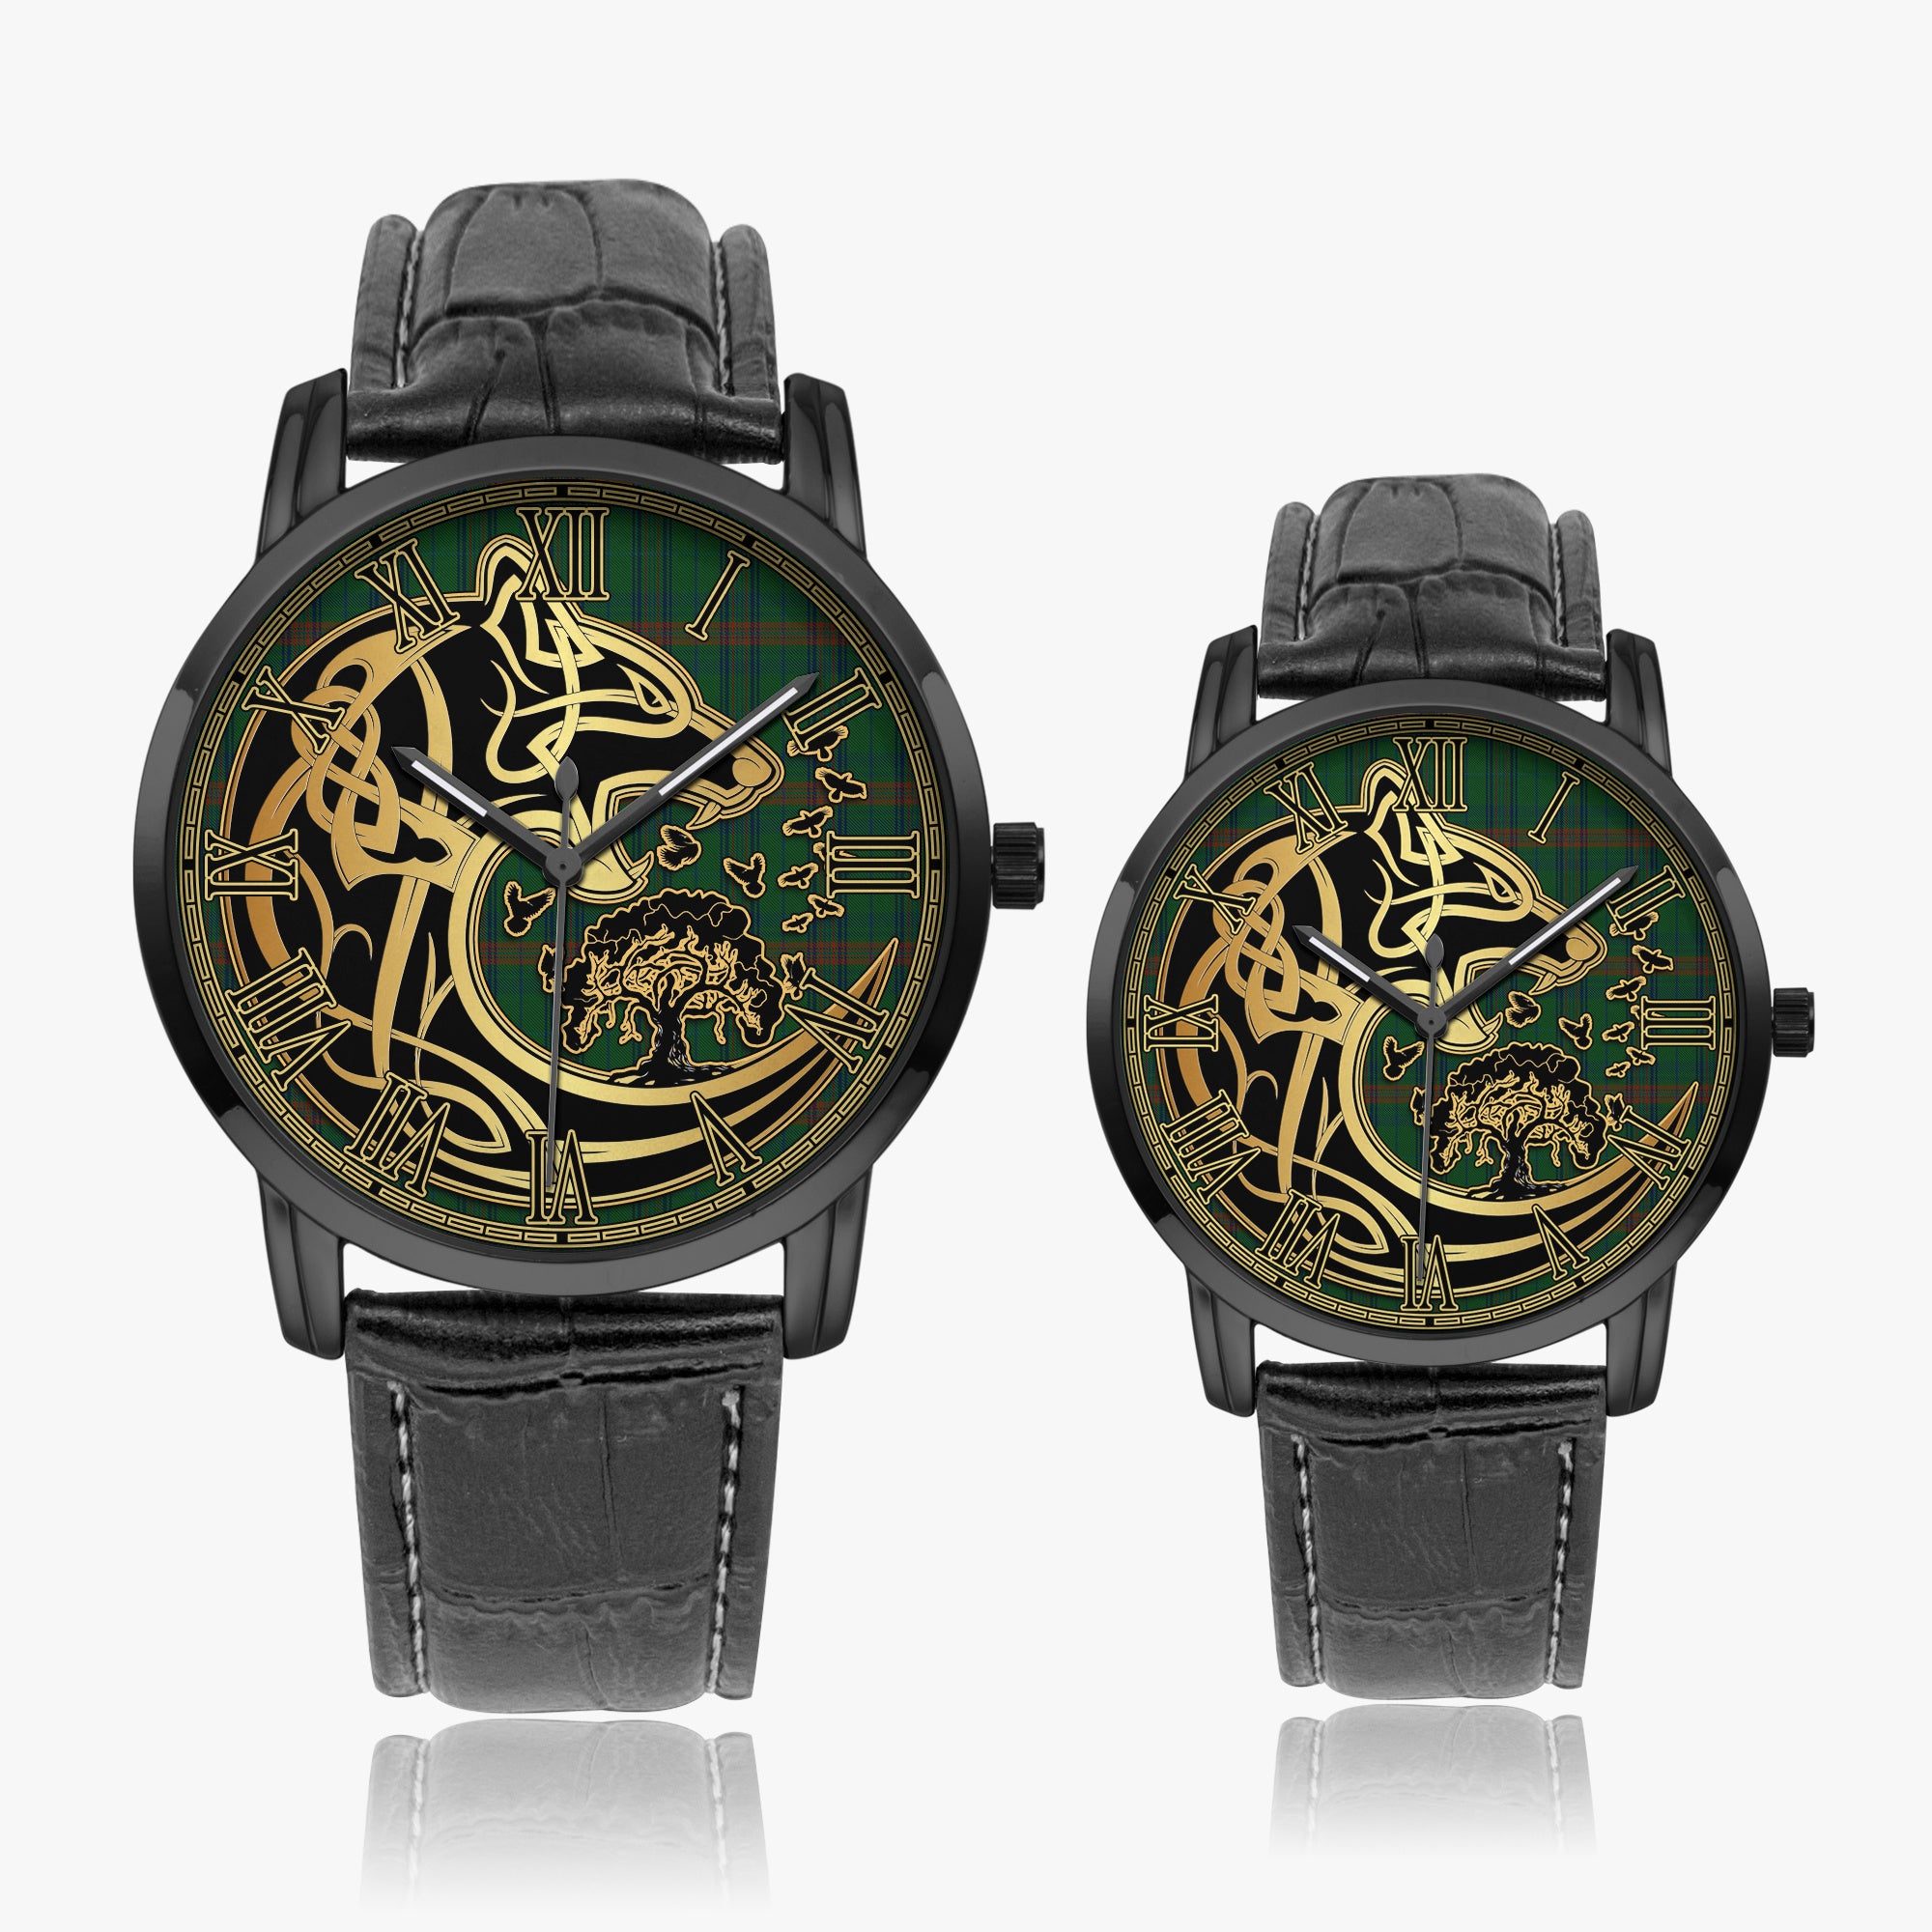 owen-of-wales-tartan-watch-with-leather-trap-tartan-instafamous-quartz-leather-strap-watch-golden-celtic-wolf-style